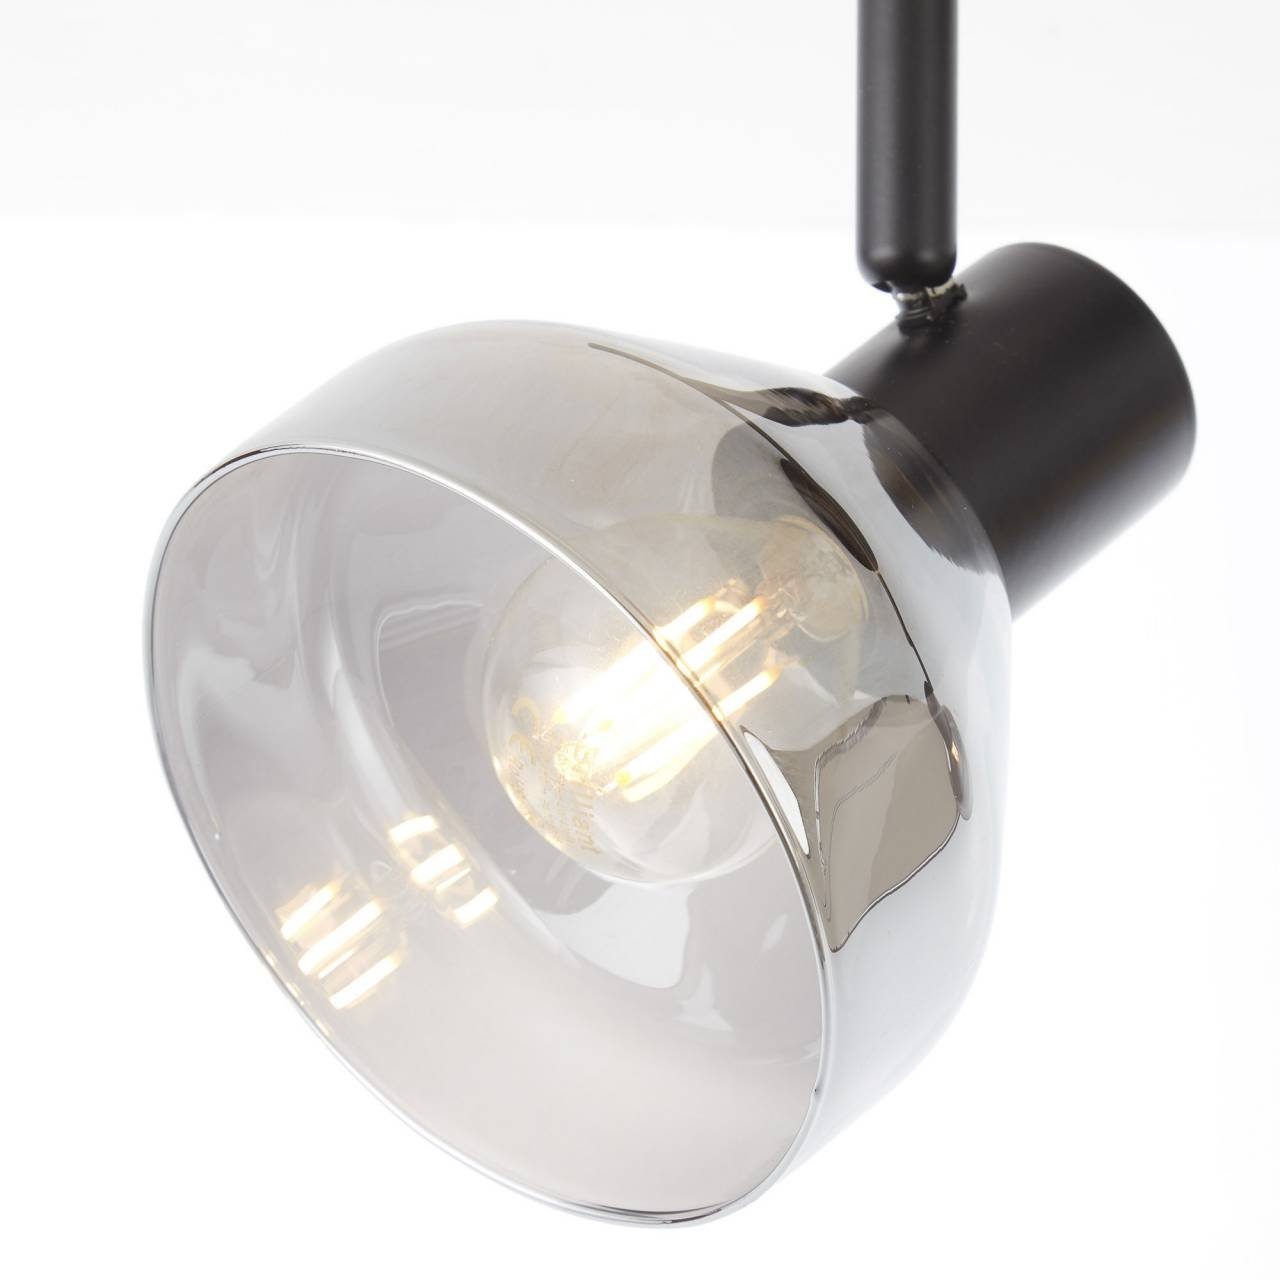 4x Reflekt schwarzmatt/rauchglas Reflekt, D45, E14, 4flg Deckenleuchte Spotrohr Brilliant 18W Lampe